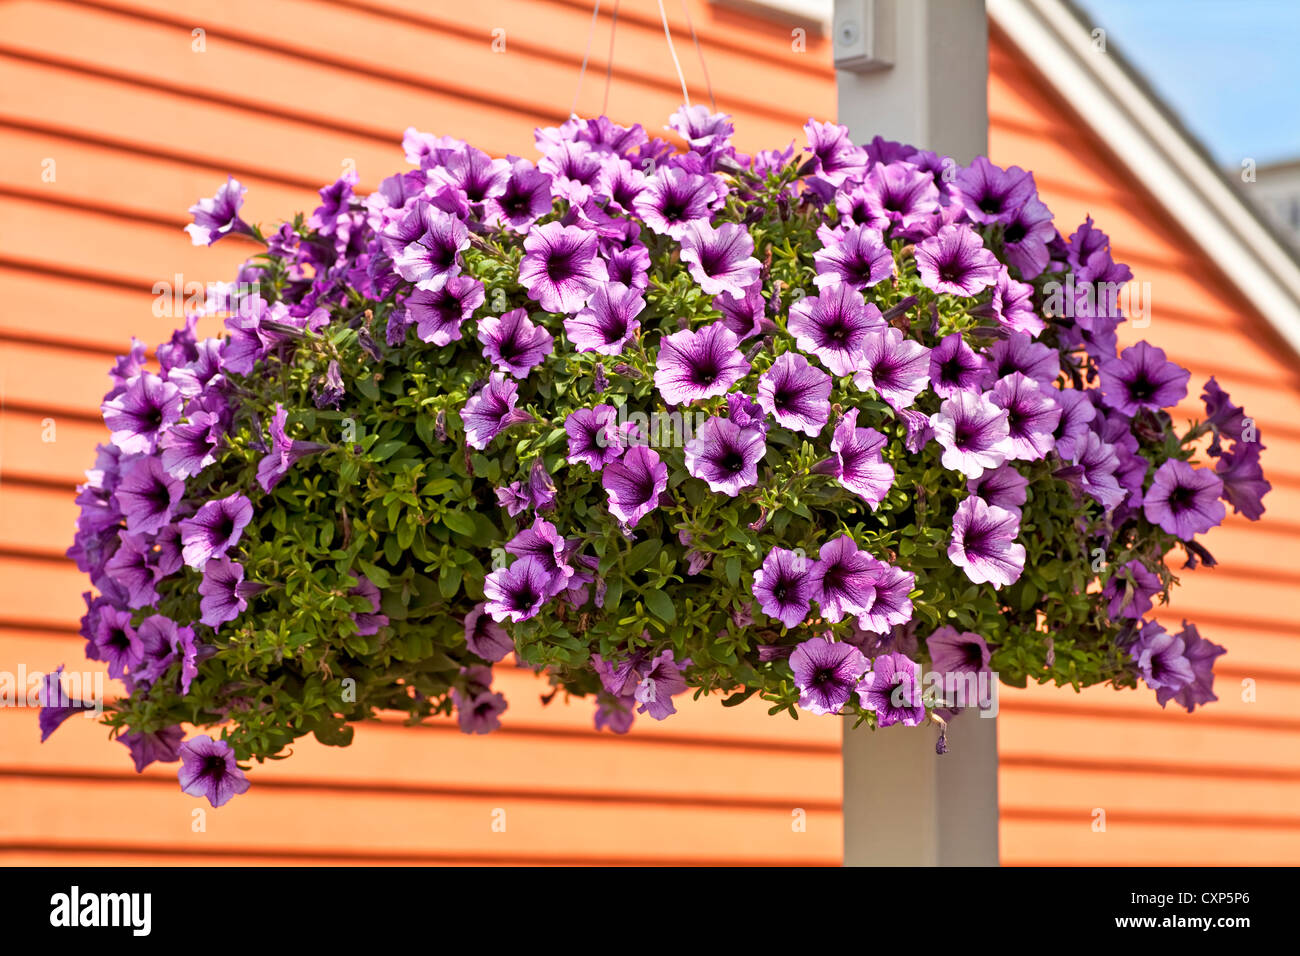 A hanging basket full of purple petunias Stock Photo